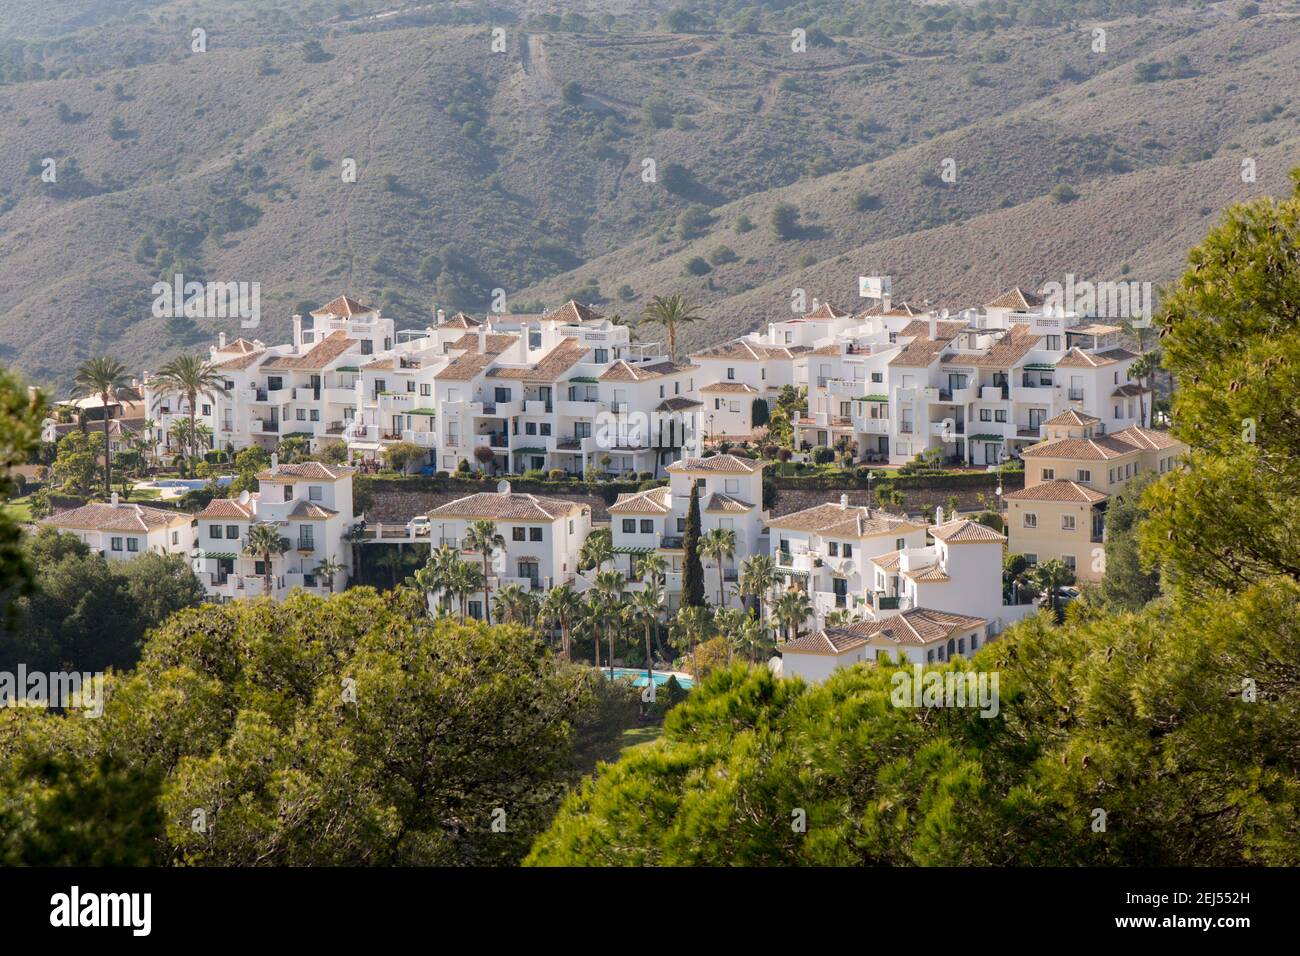 Alhaurin el grande Golf, apartment blocks, inland near golf course, Malaga, Spain. Stock Photo